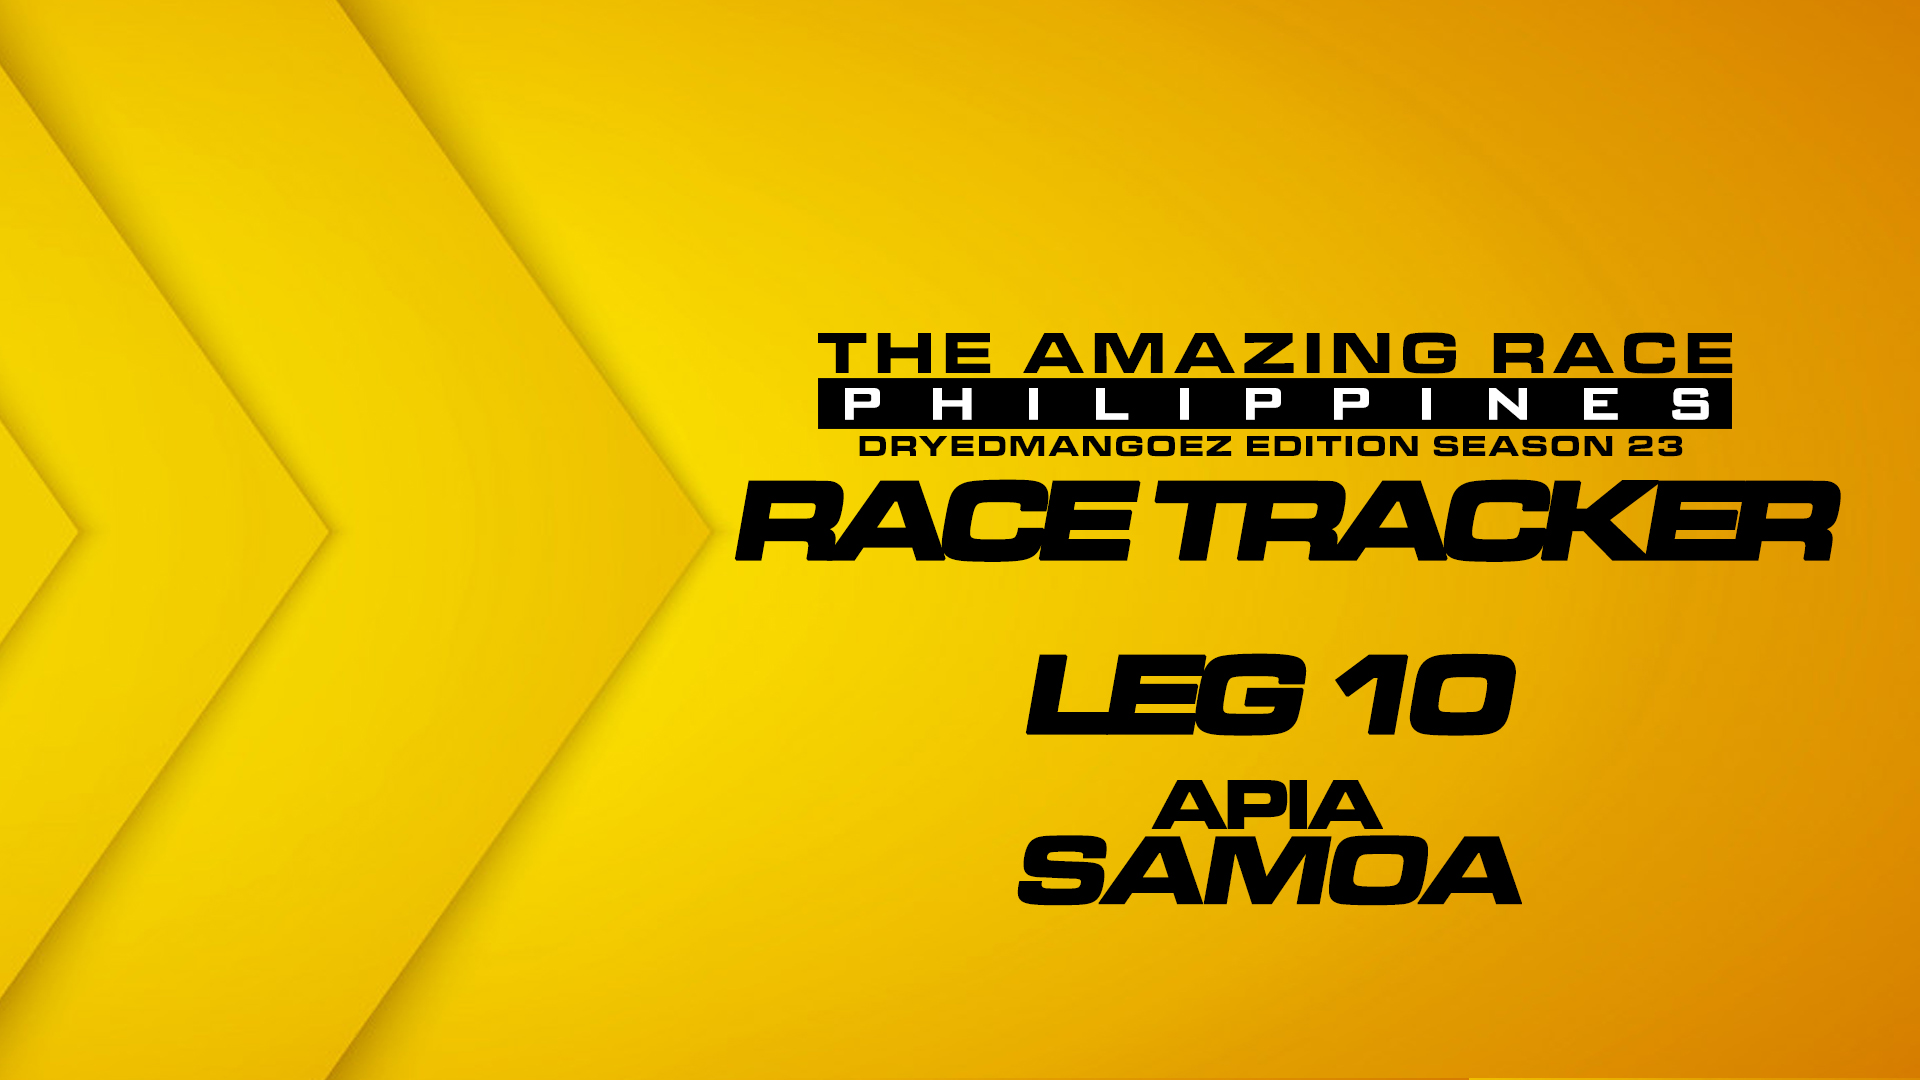 The Amazing Race Philippines: DryedMangoez Edition Season 23 Race Tracker – Leg 10